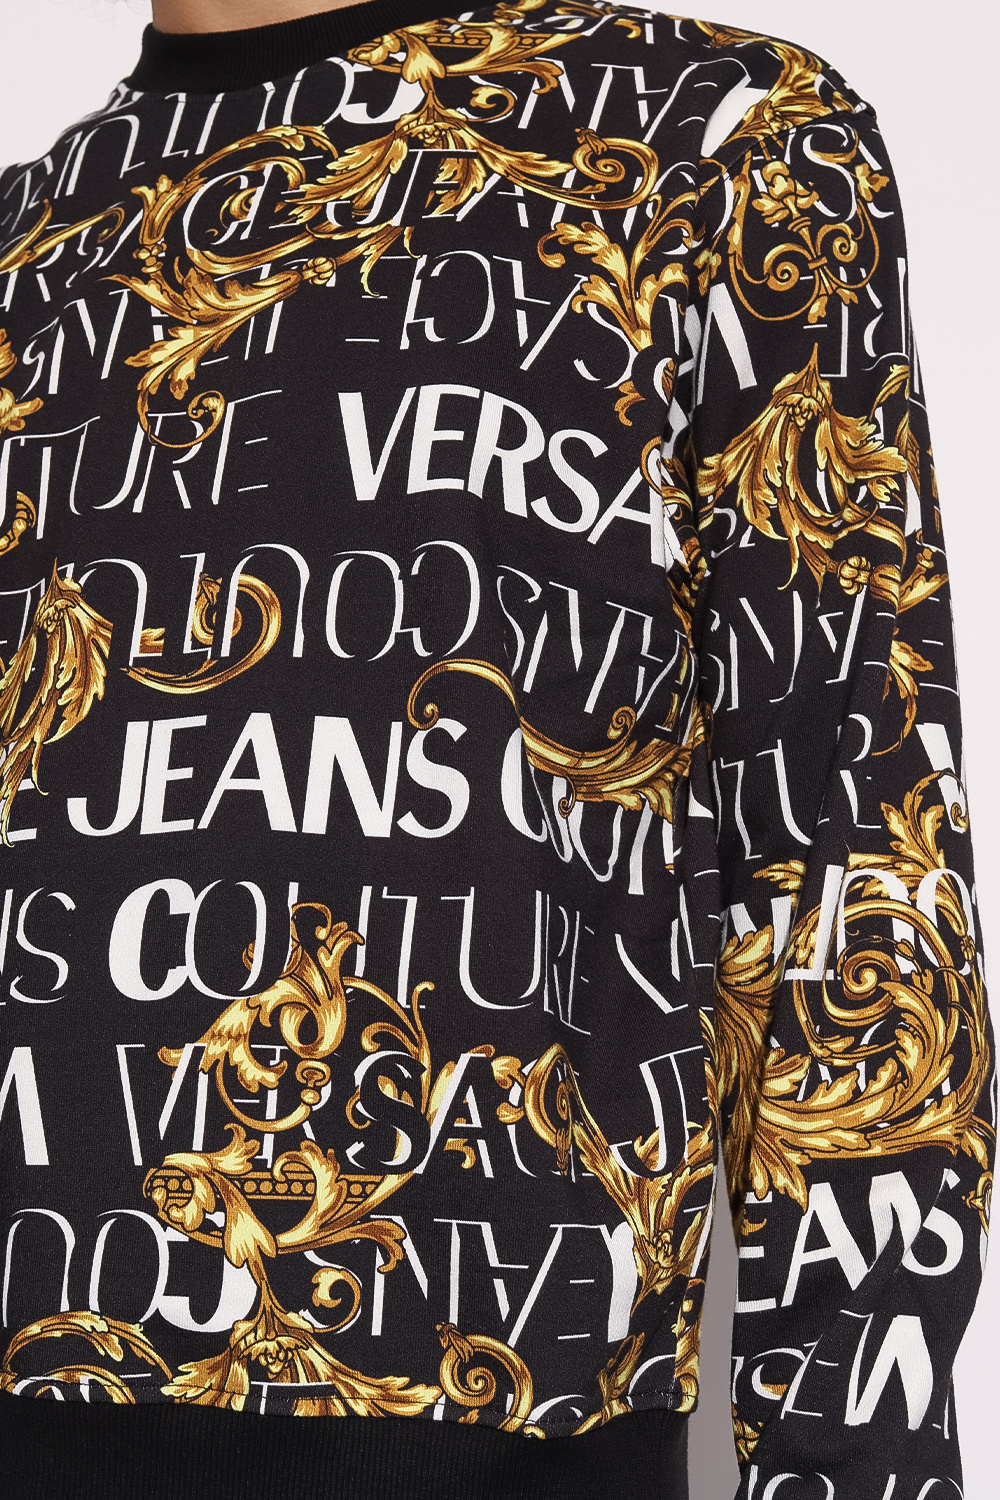 Versace Jeans Couture Emerson Women's Shirt